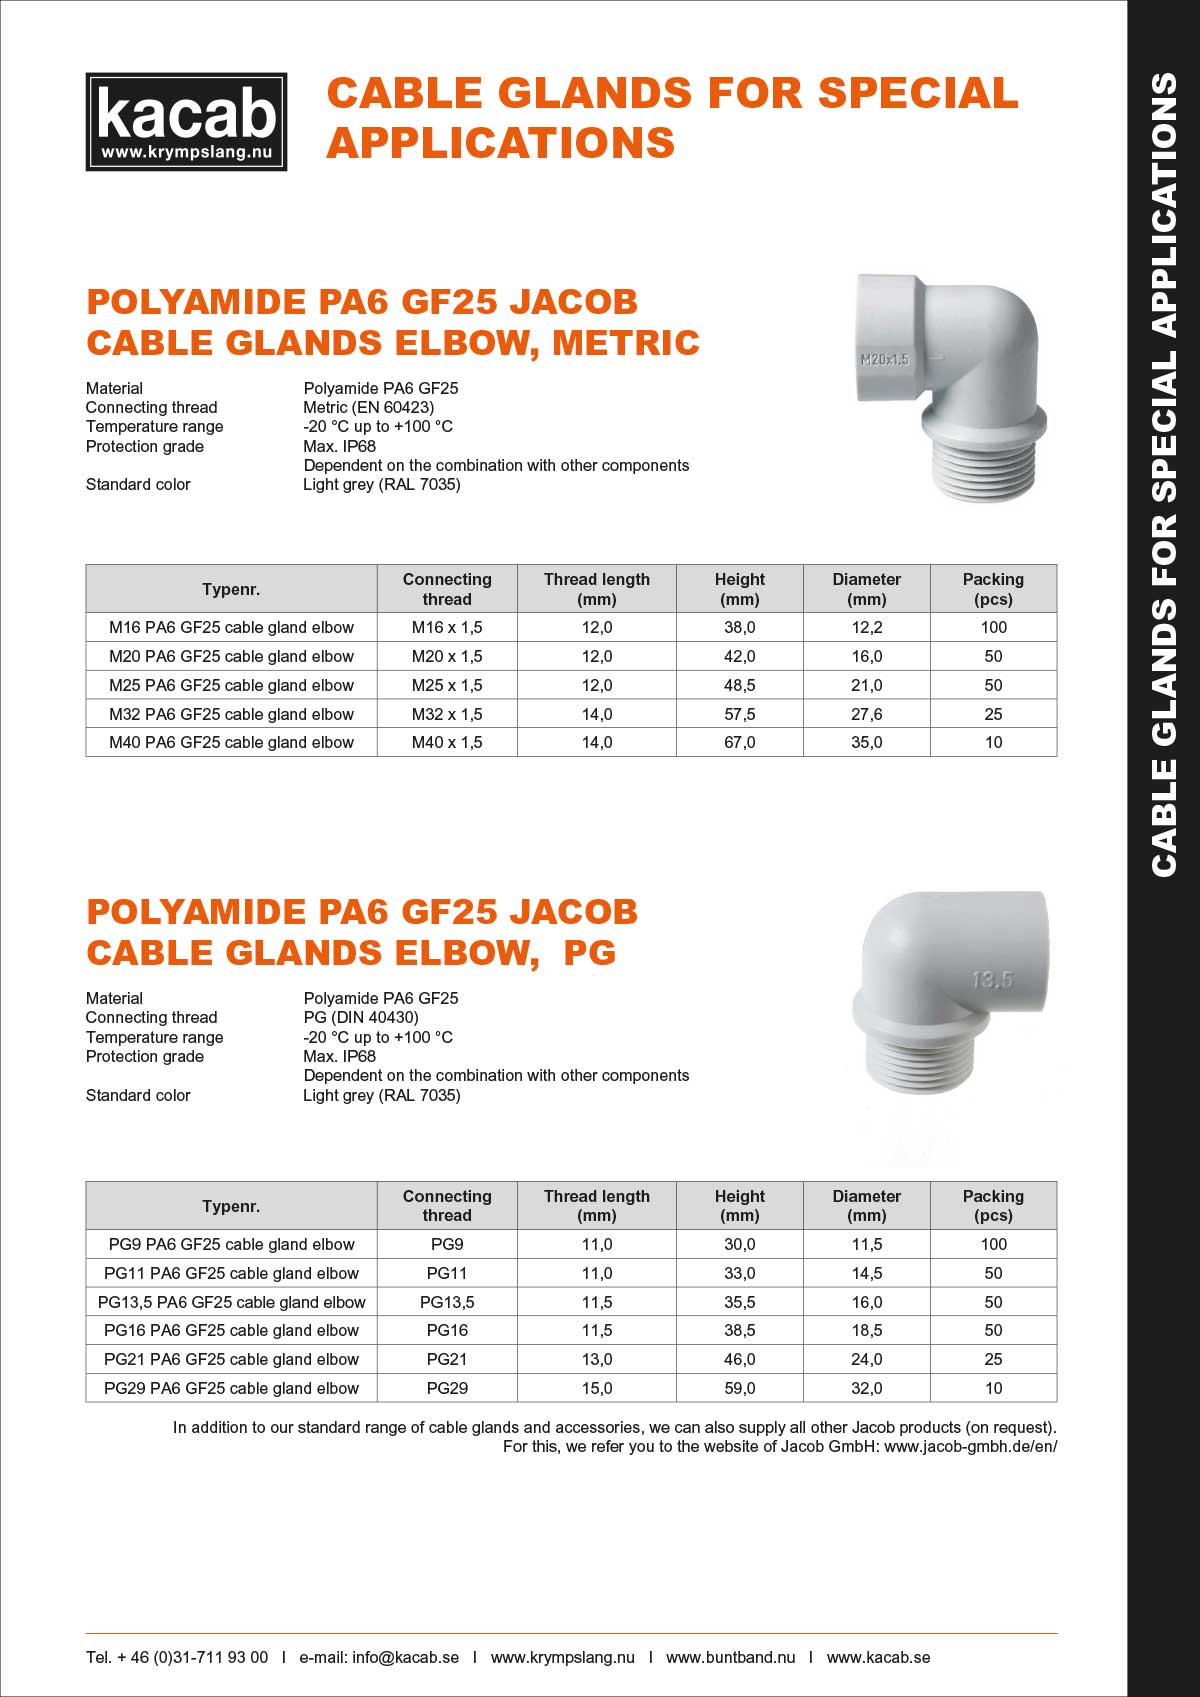 Polyamide PA6 GF25 Jacob cable glands elbow - Metric